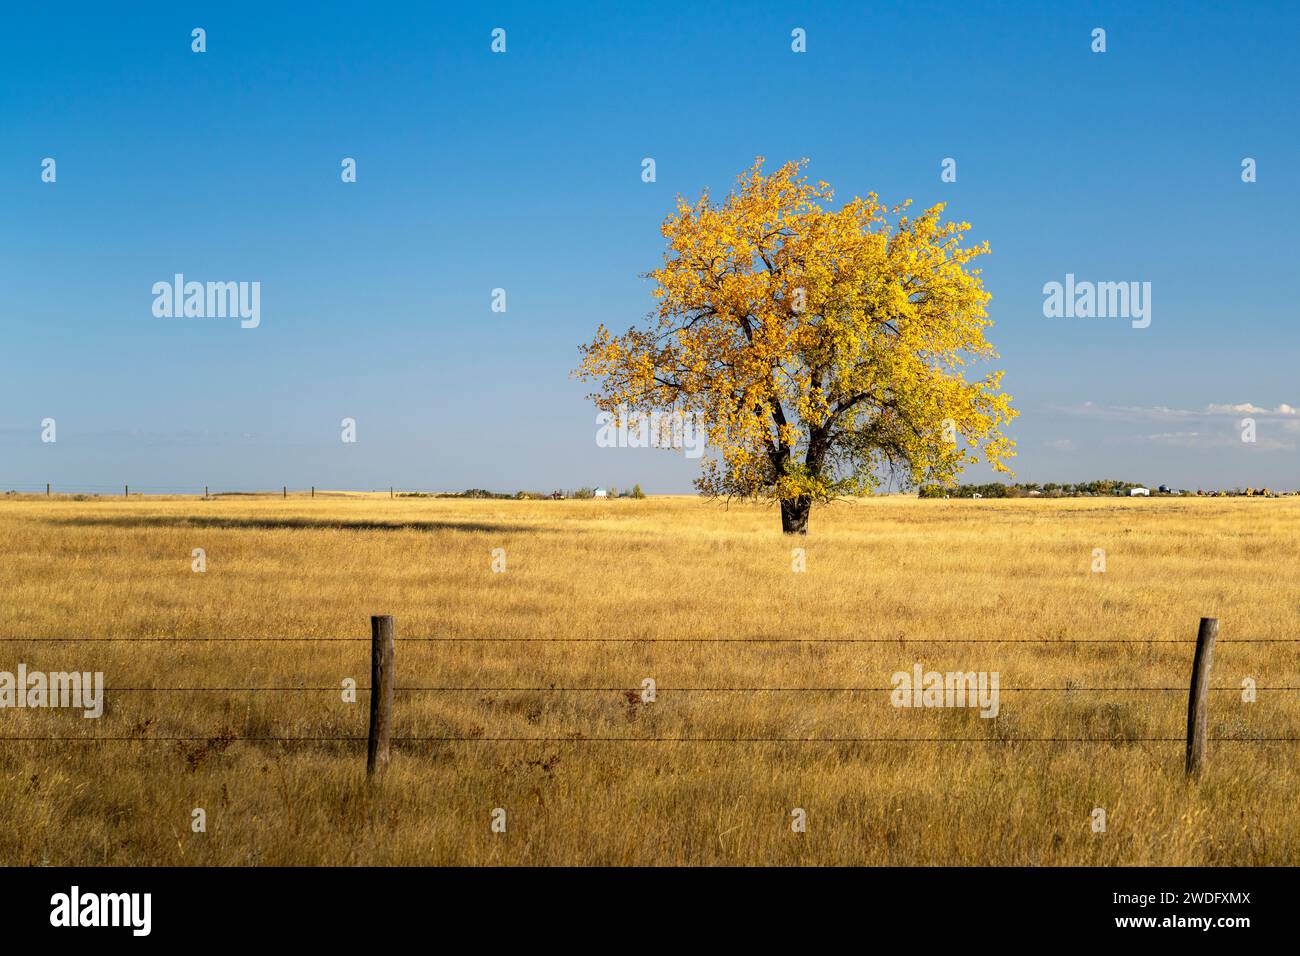 A lone tree with fall foliage color near Swift current, Saskatchewan, Canada. Stock Photo